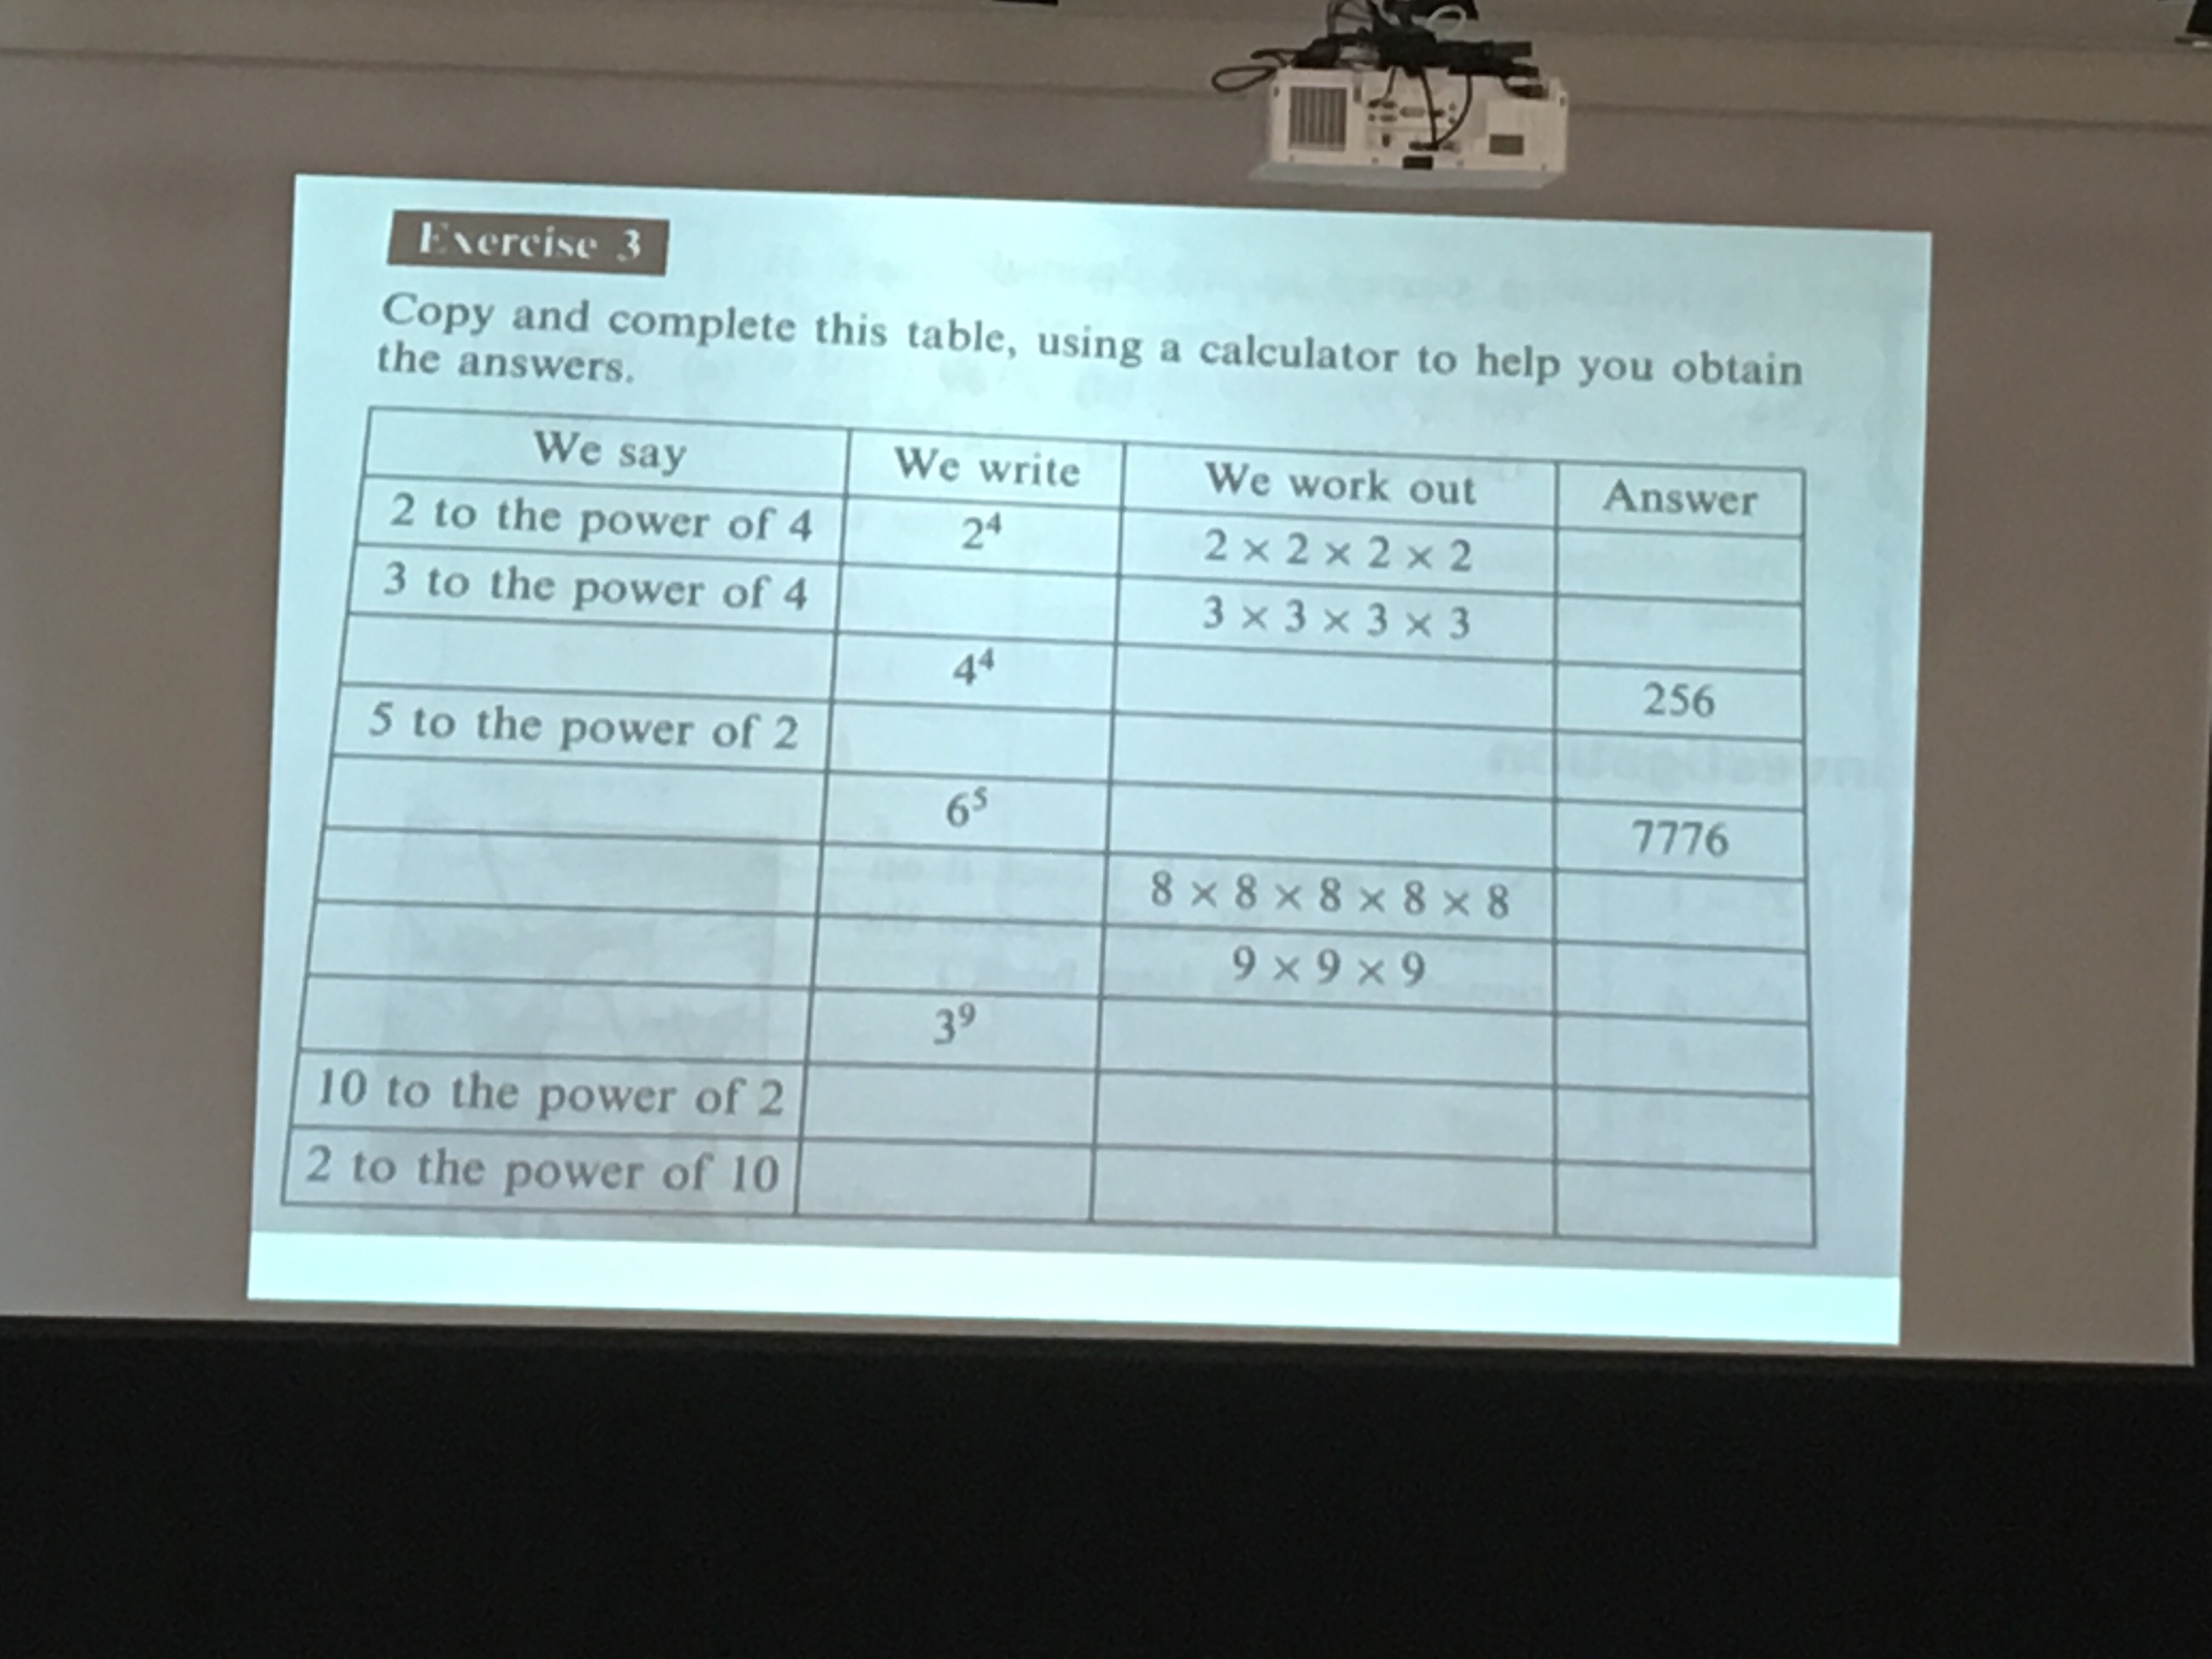 Presentation slide by Jo Morgan on Indices at #mathsconf15